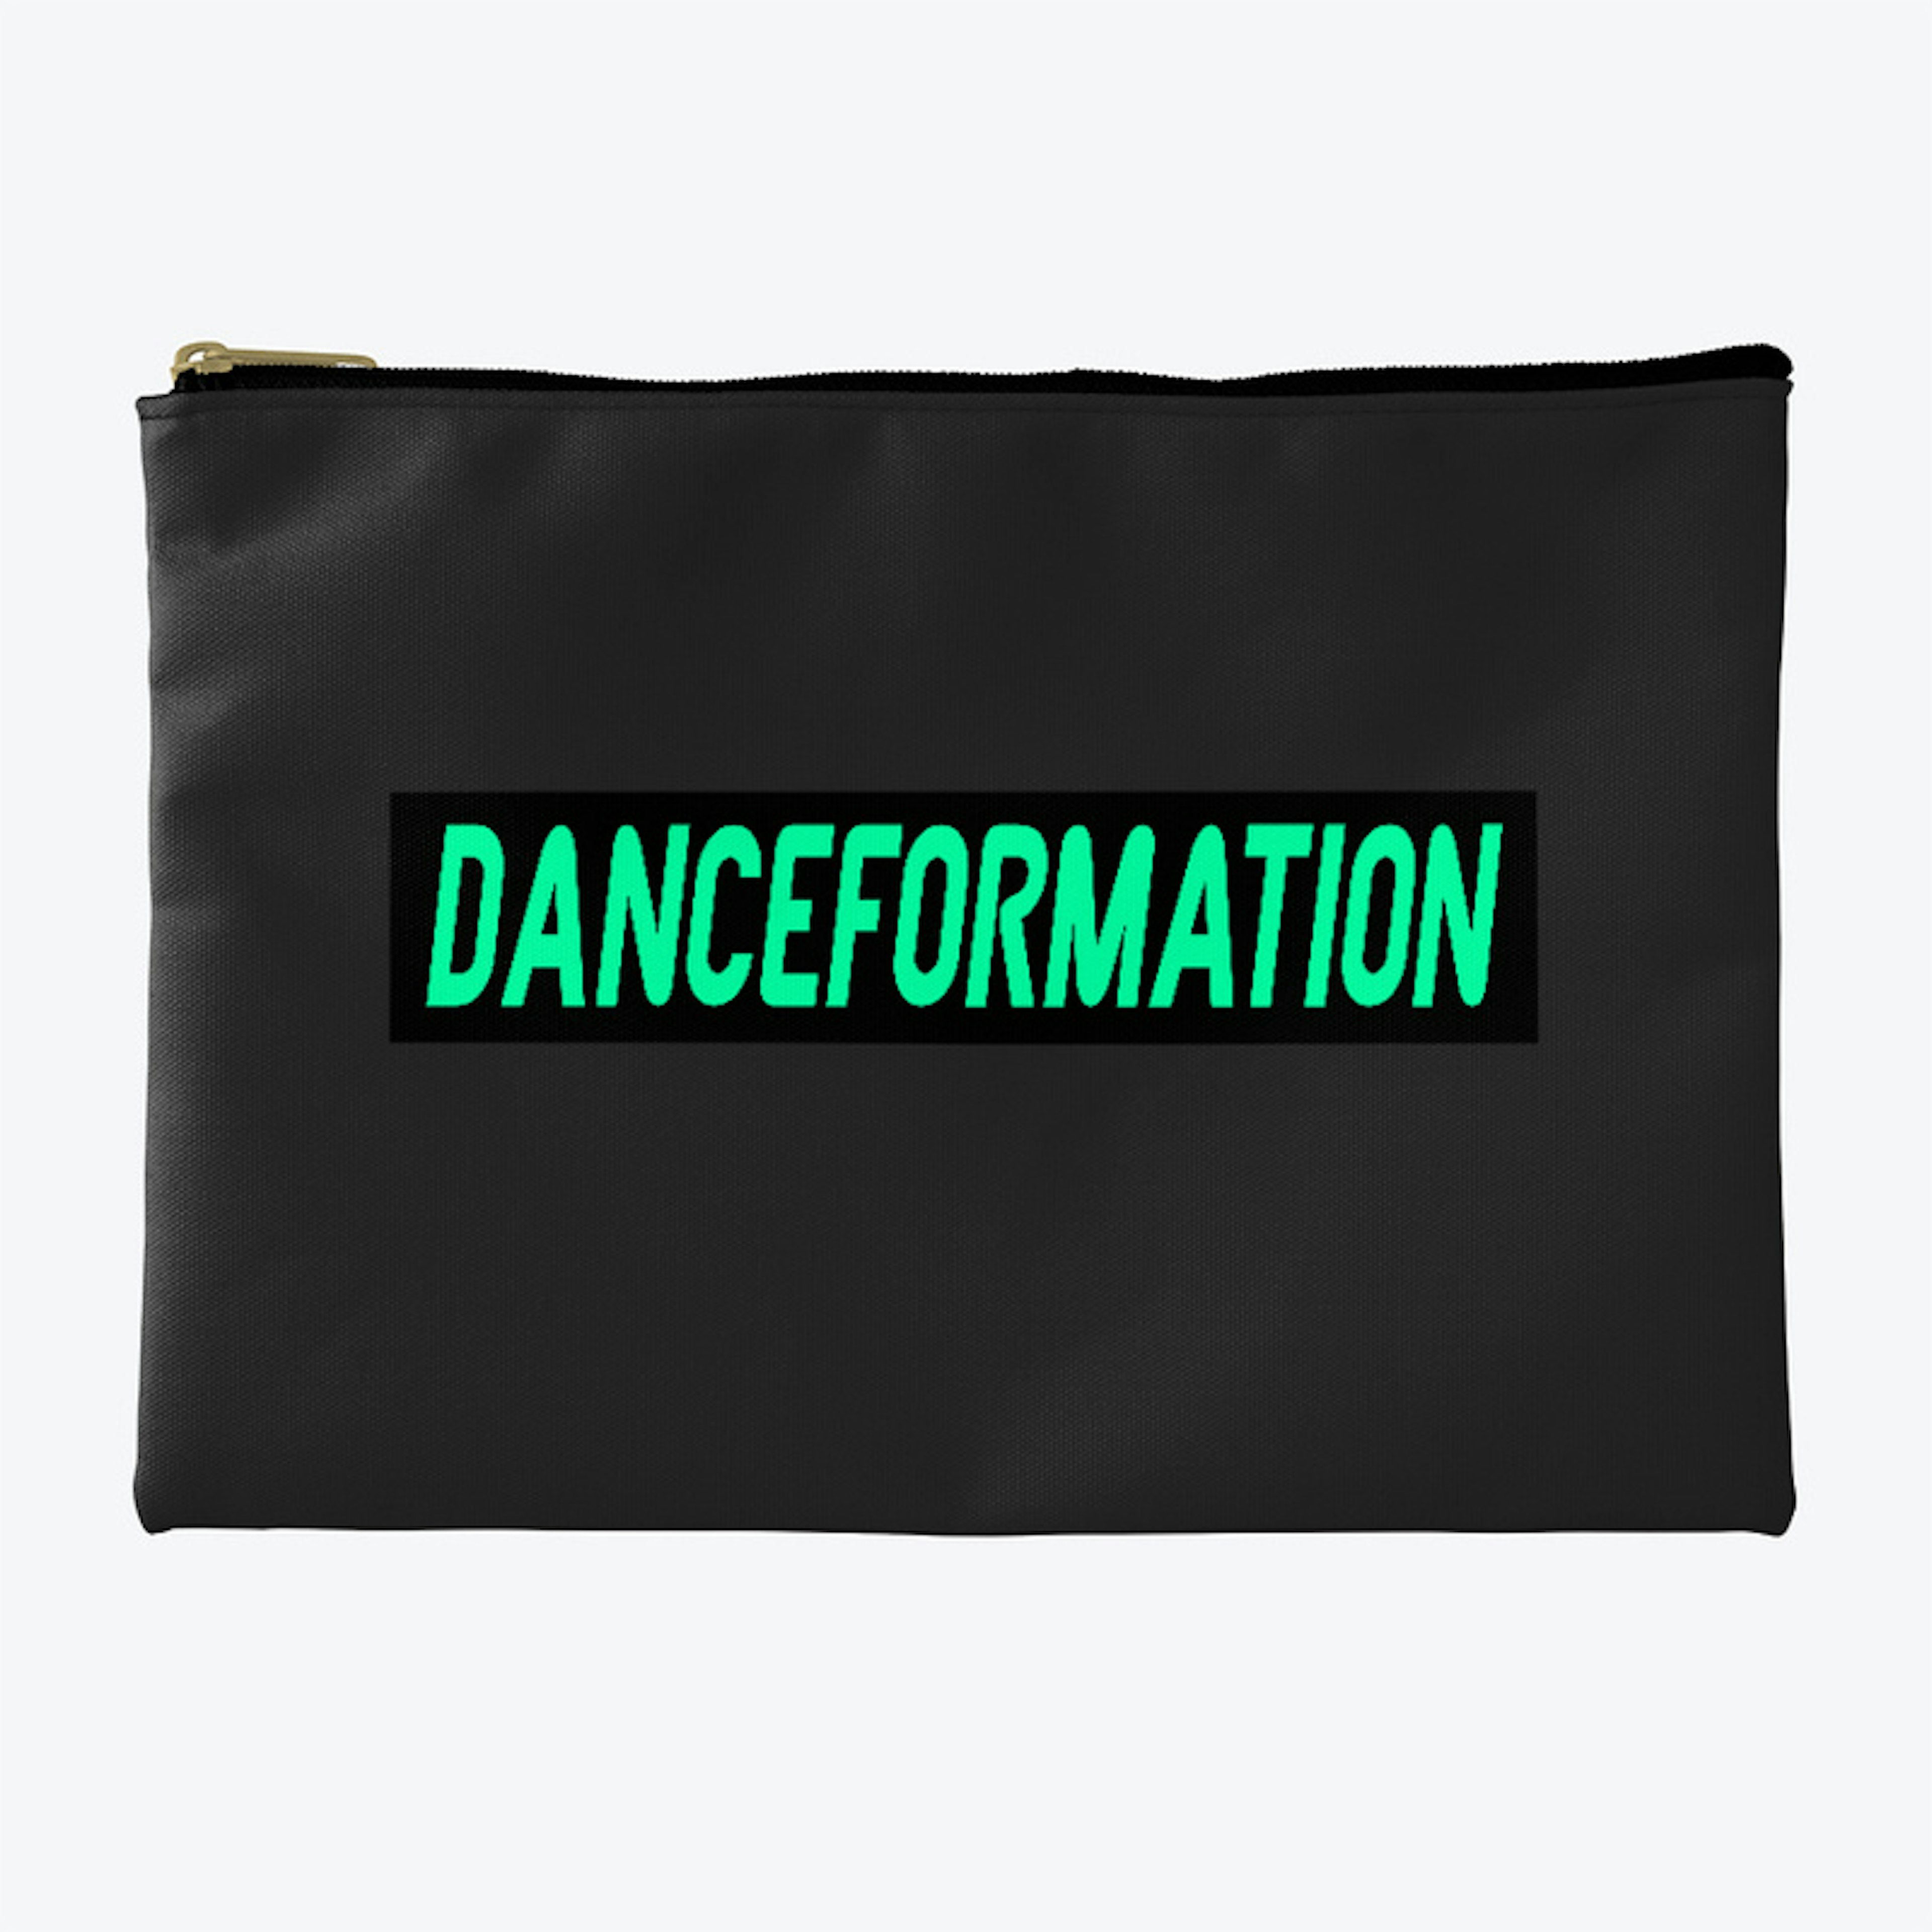 Danceformation 2.0